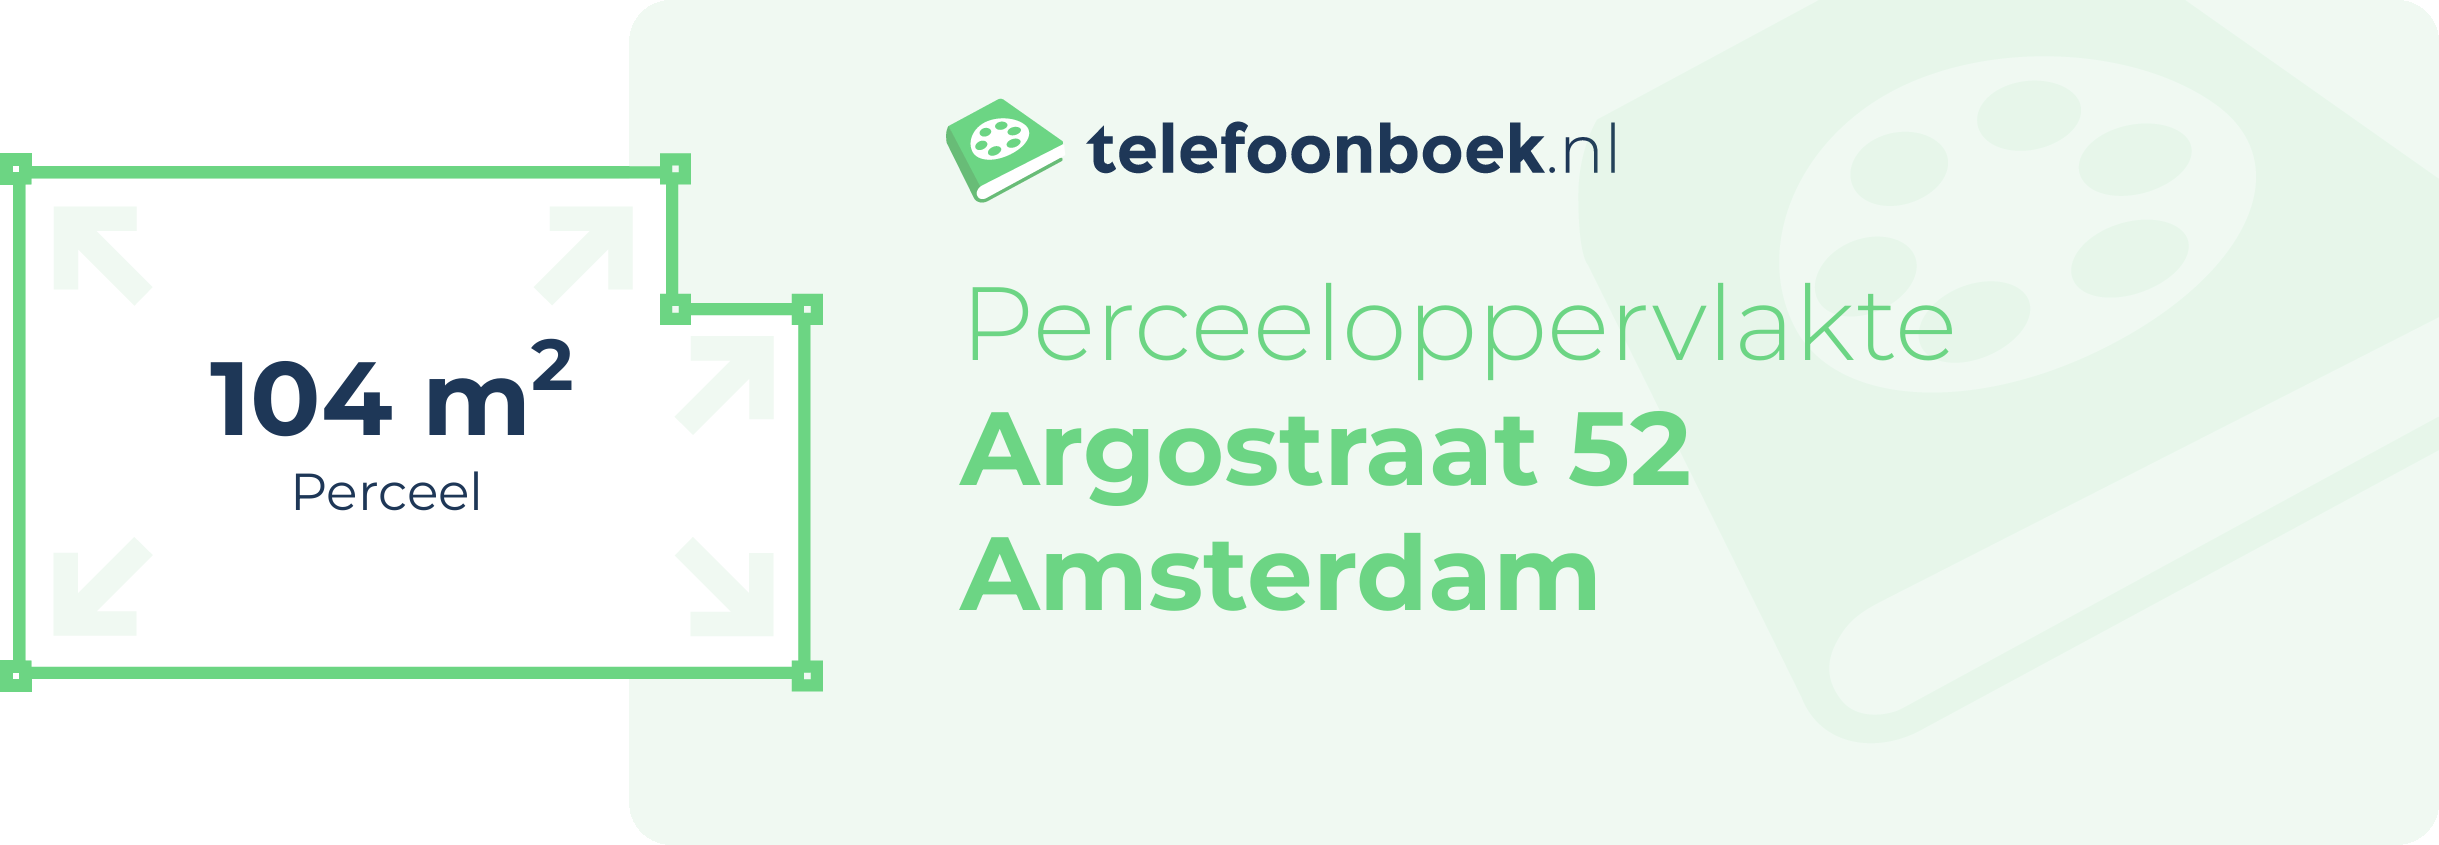 Perceeloppervlakte Argostraat 52 Amsterdam